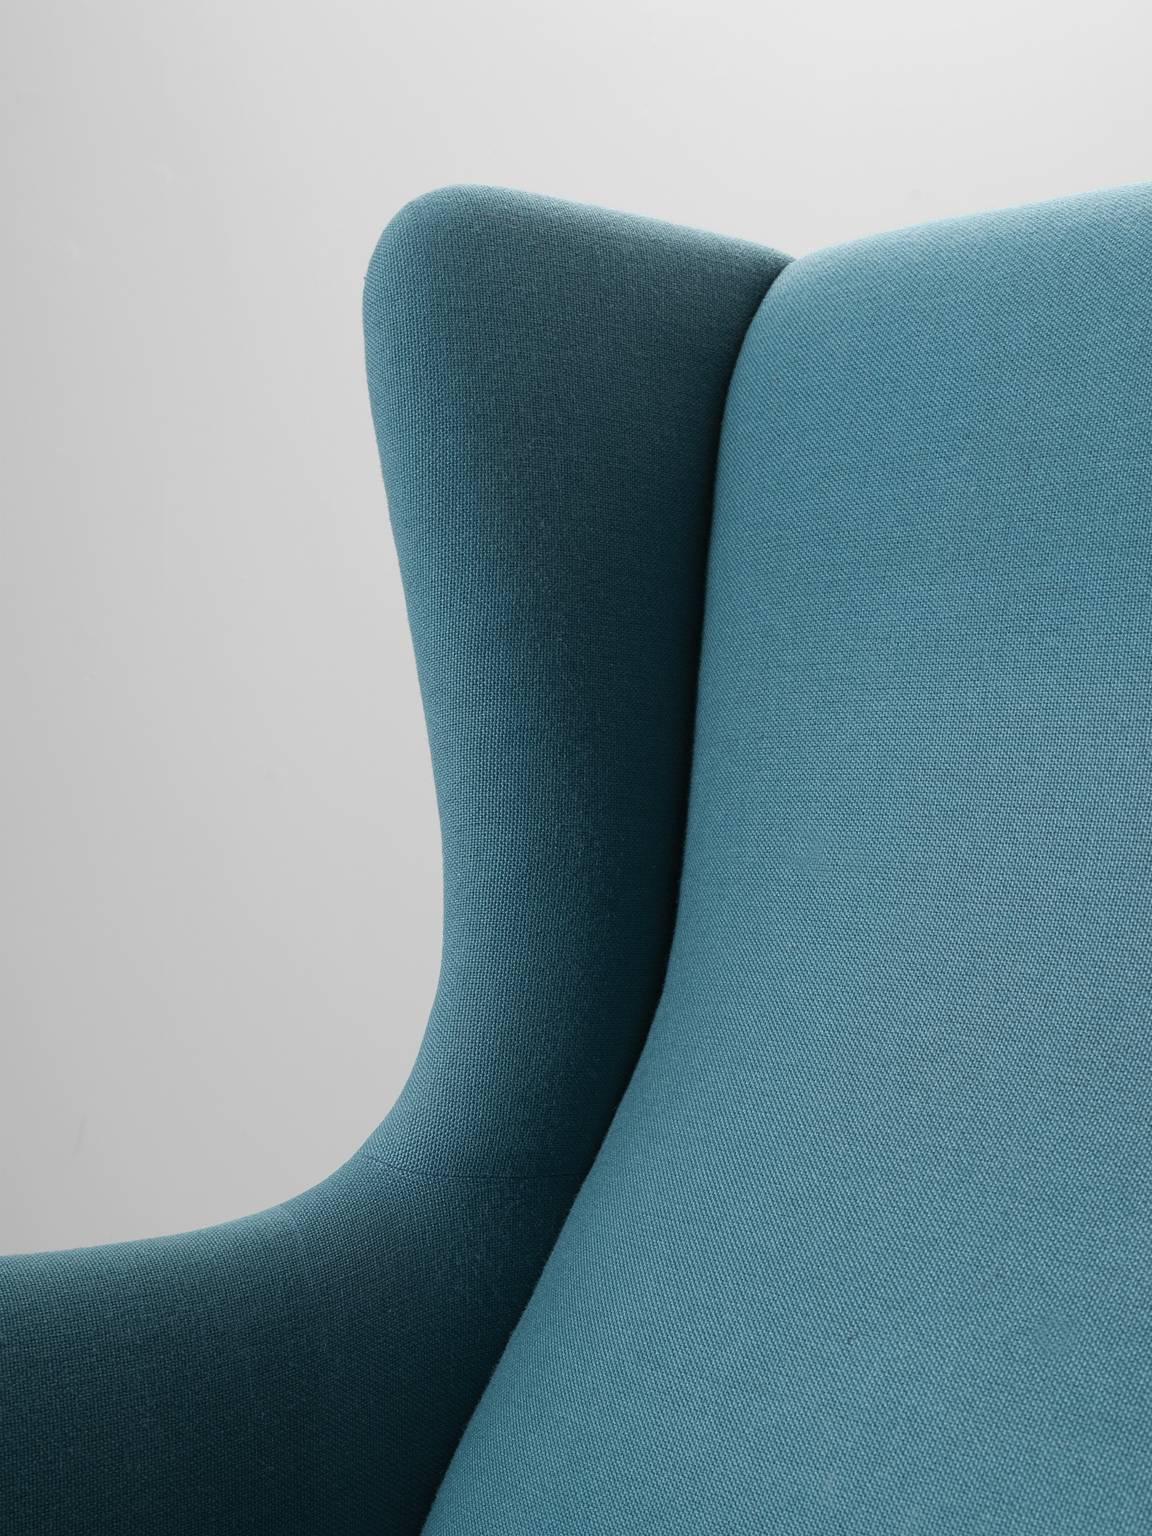 Fabric Blue Danish Lounge Chair with Ottoman